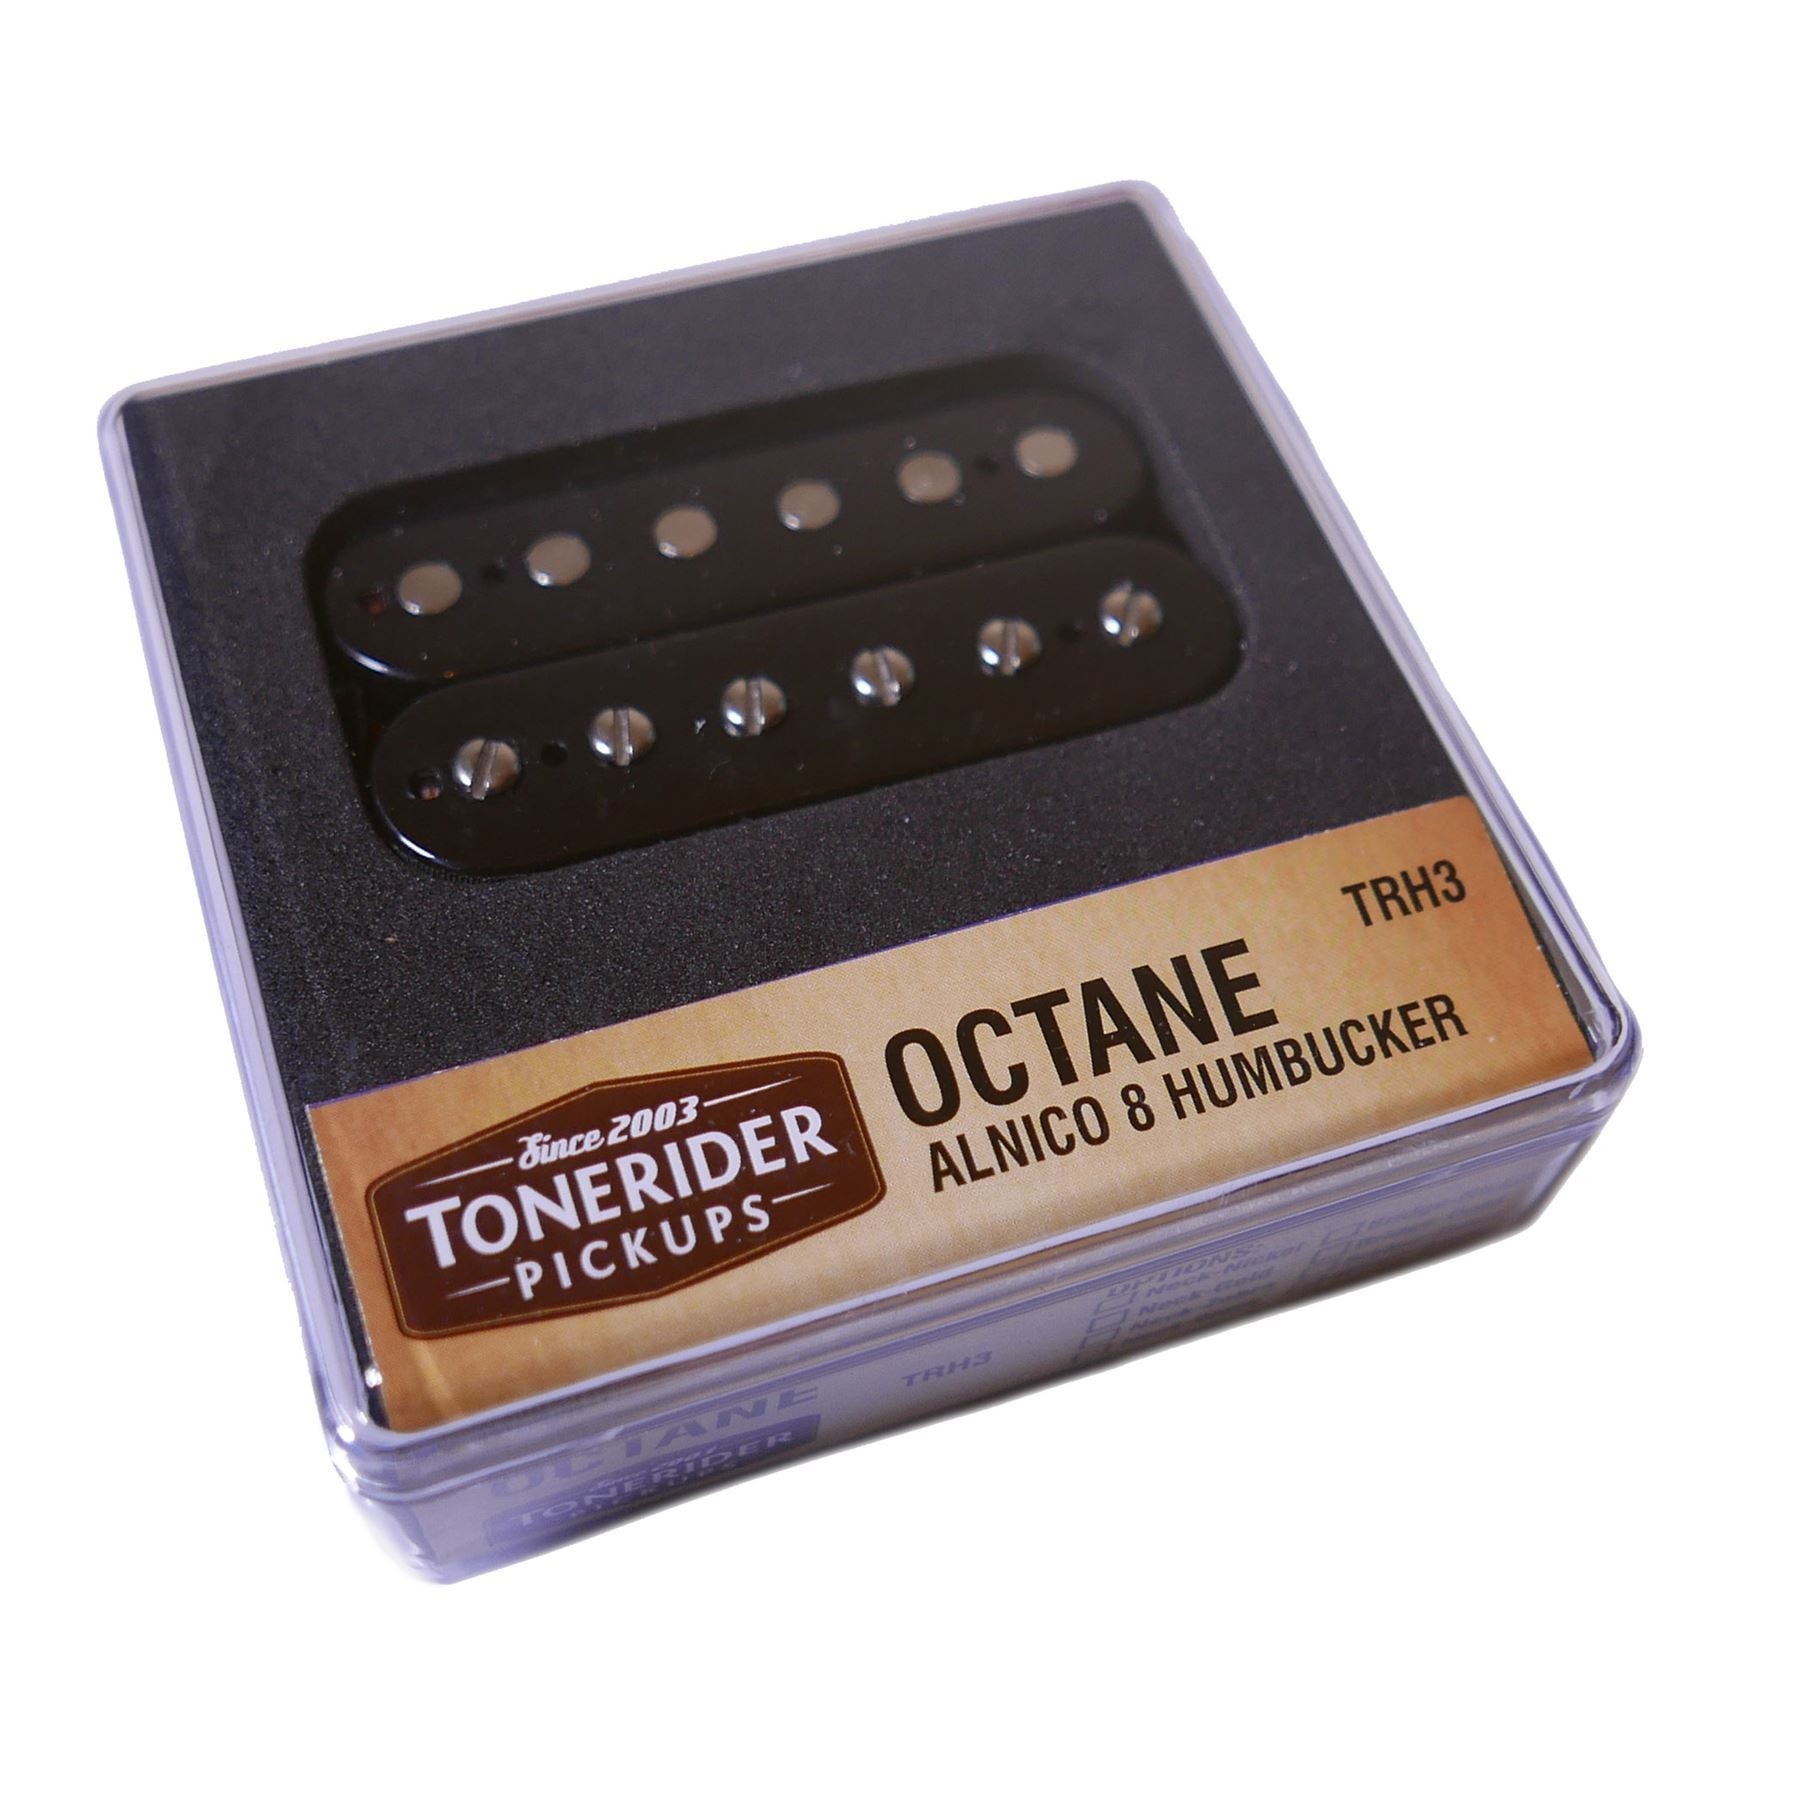 Tonerider Octane Alnico 8 F-spaced, bridge, black 